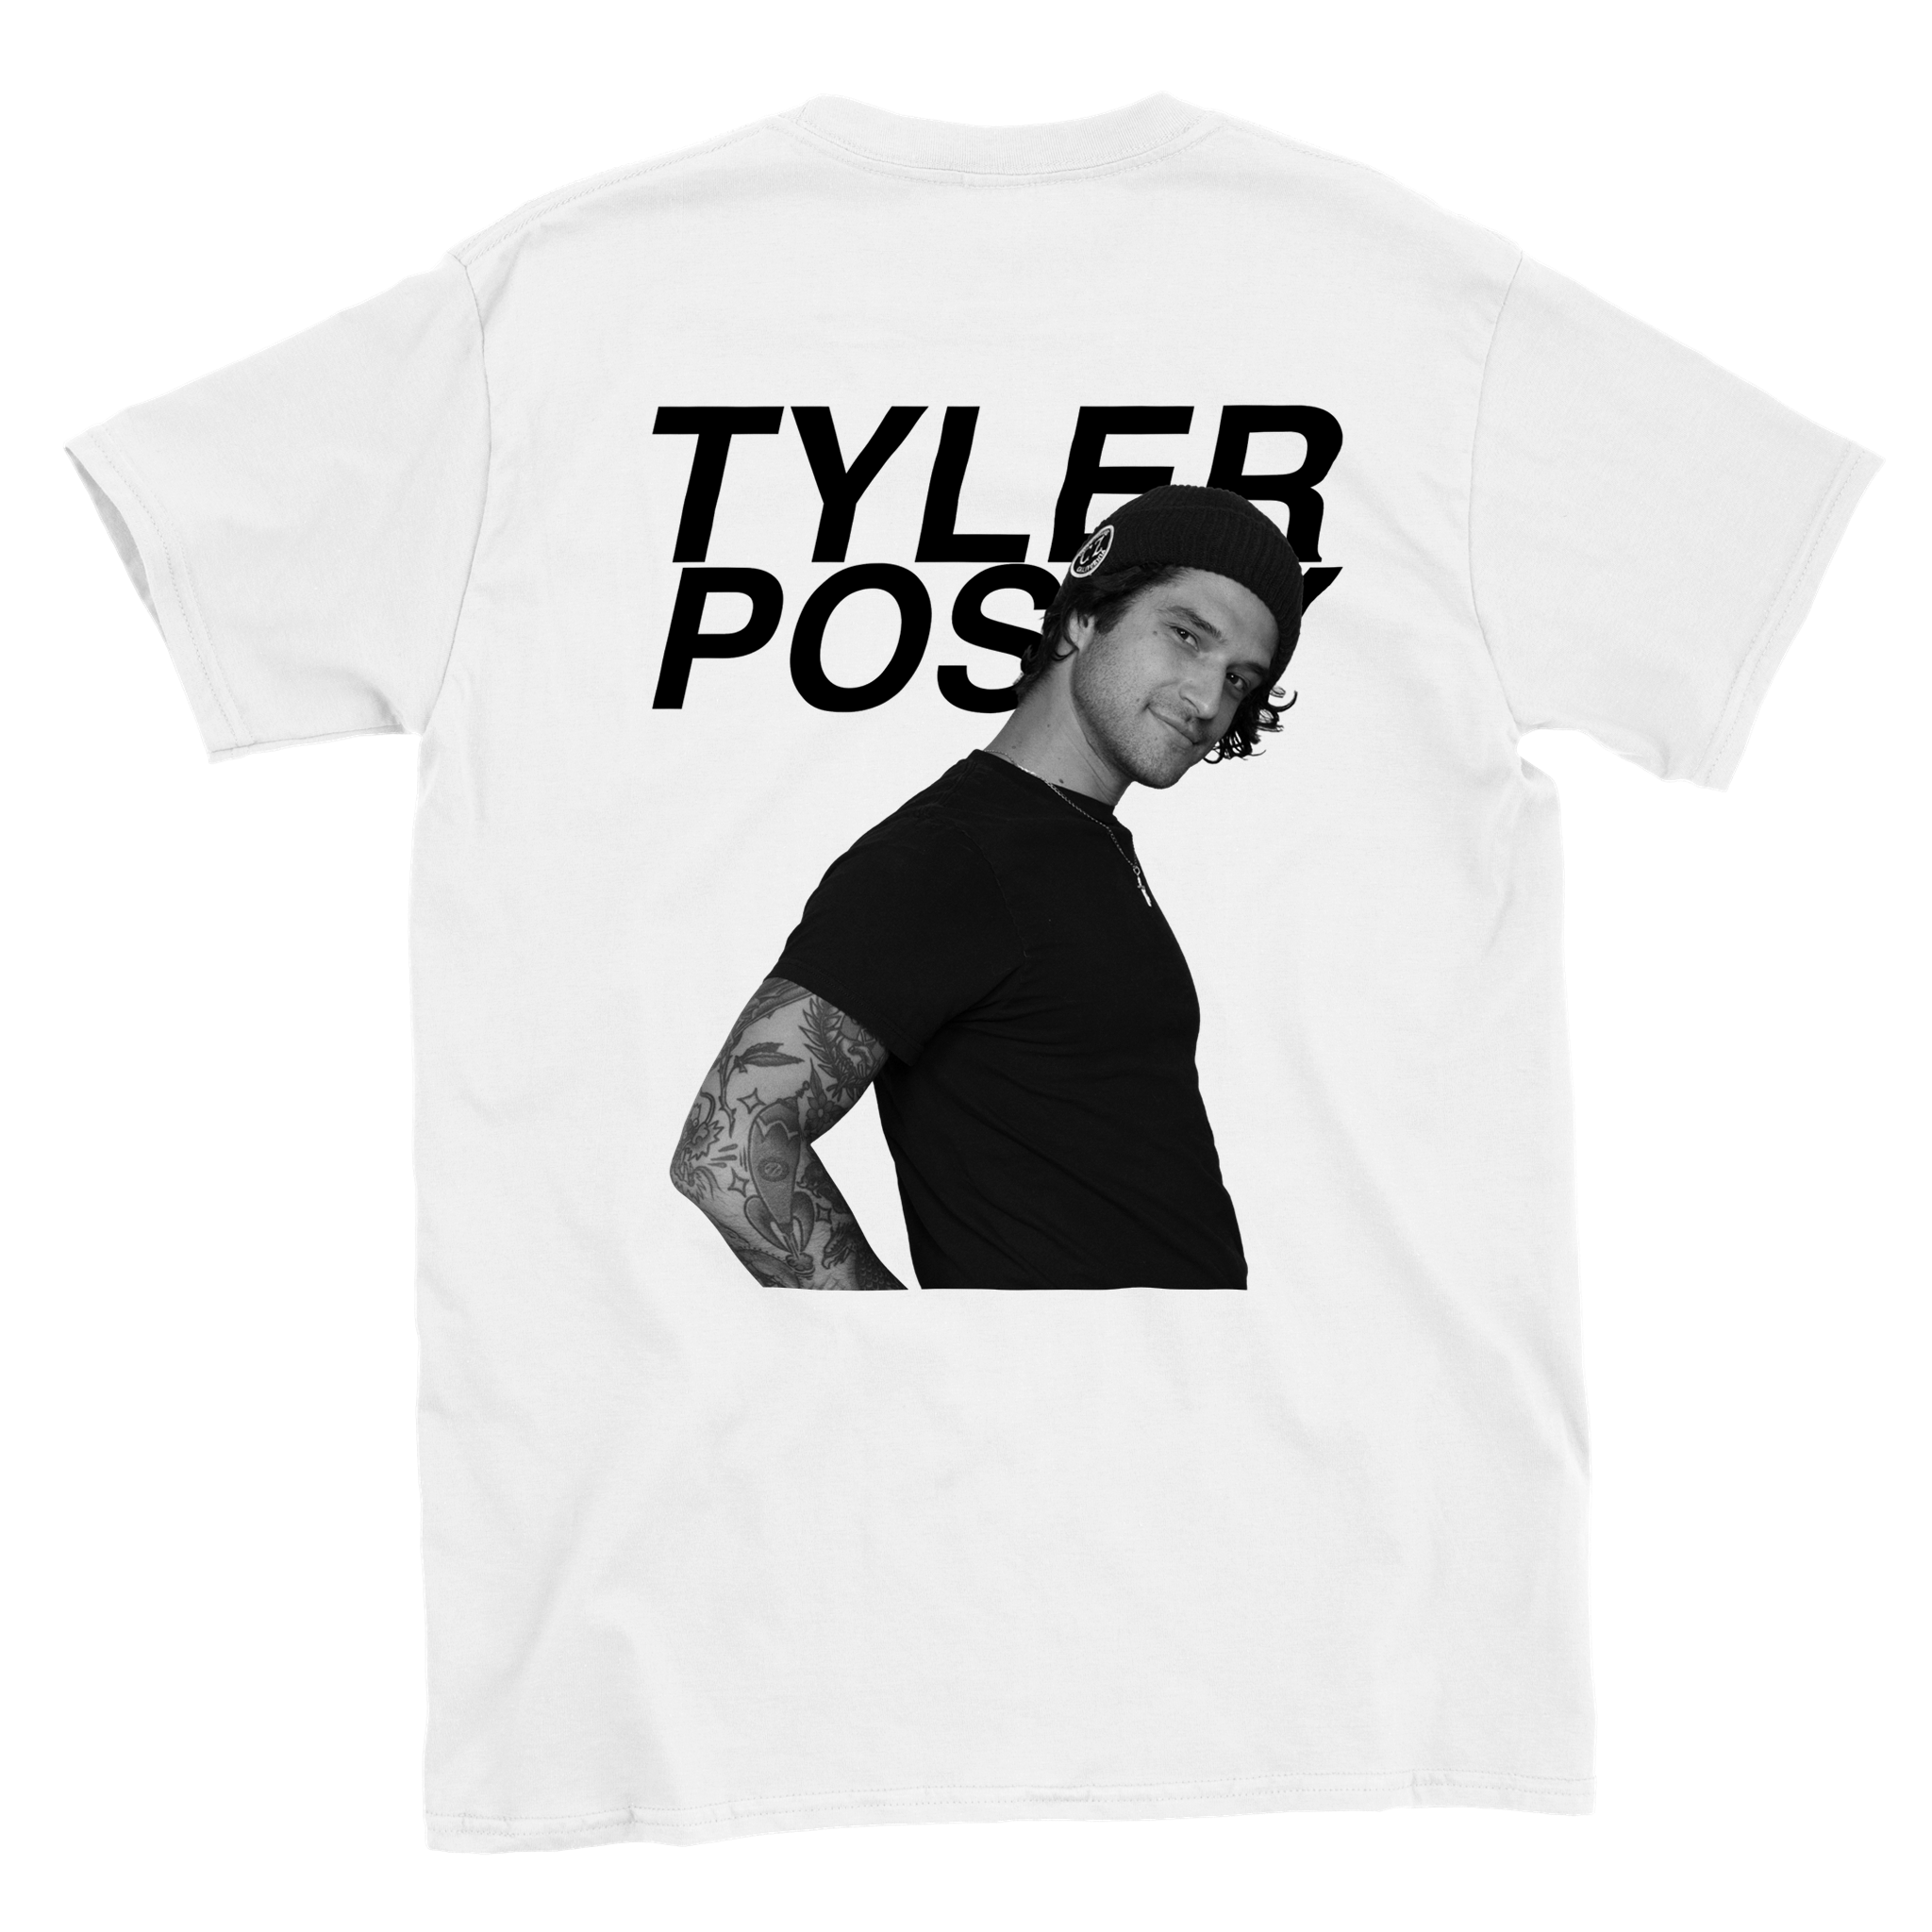 TYLER POSEY t-shirt